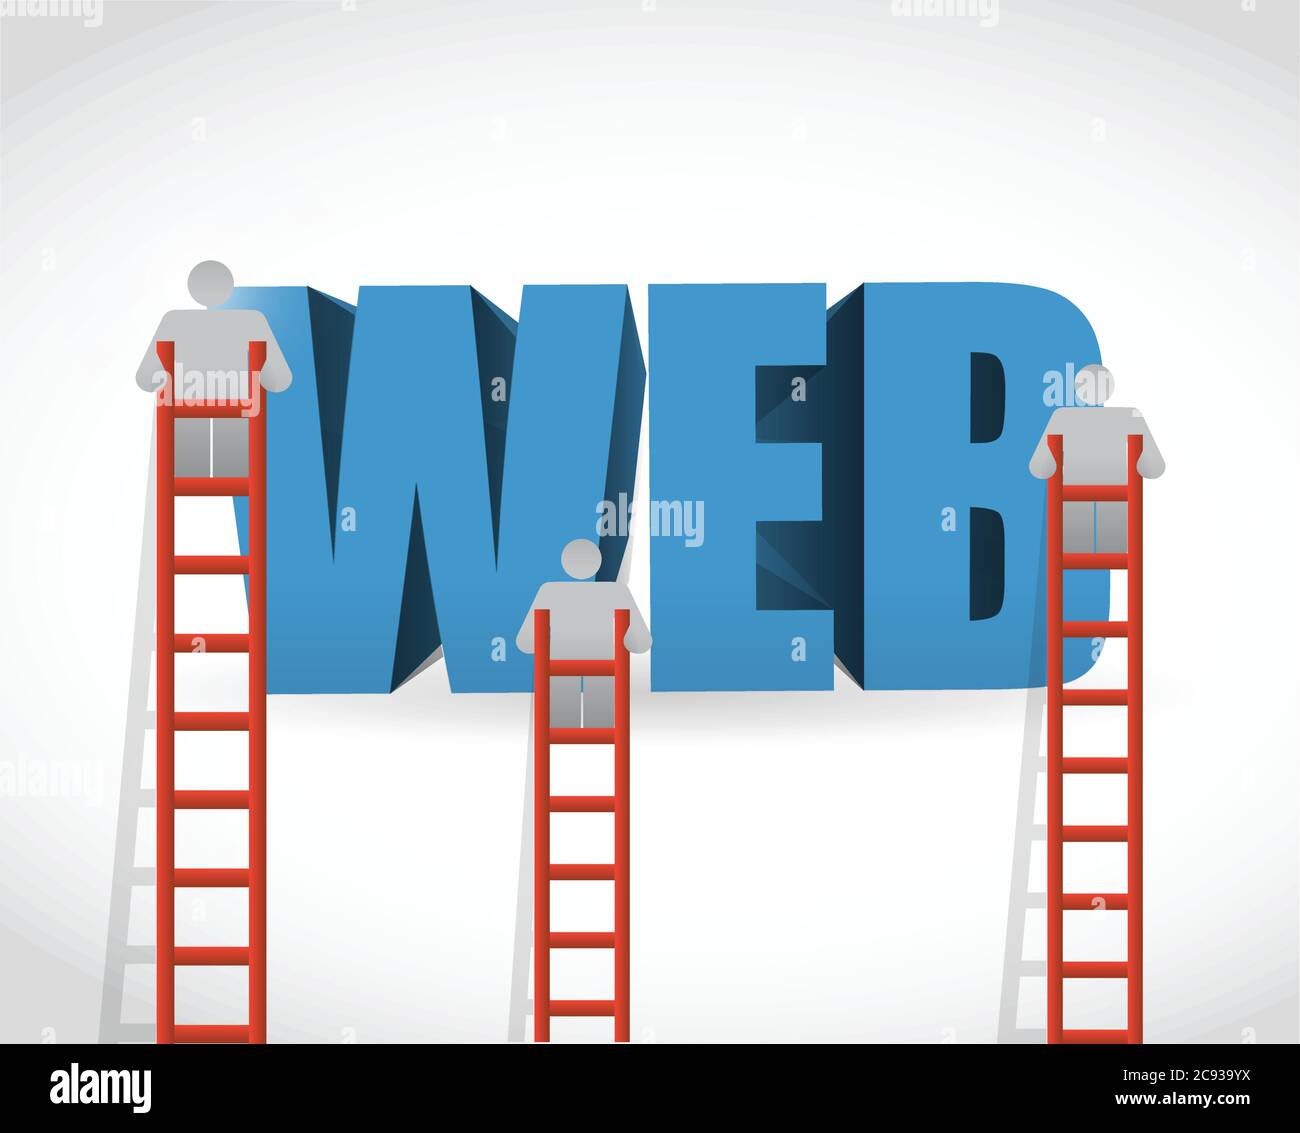 Web ladder illustration design over a white background Stock Vector